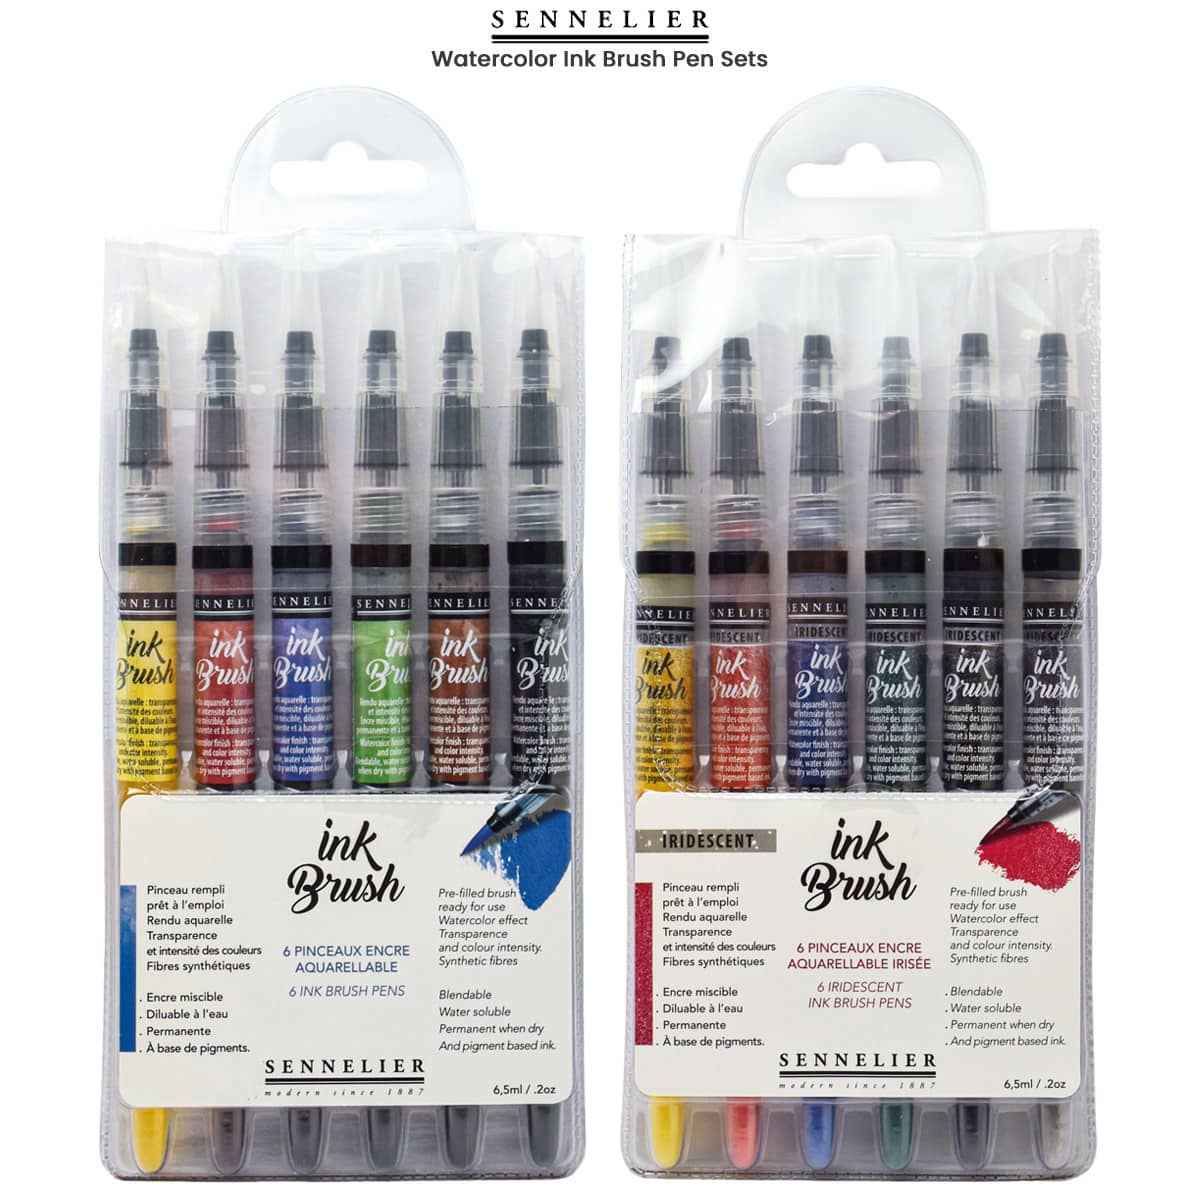 https://www.jerrysartarama.com/media/catalog/product/s/e/sennelier-watercolor-ink-brush-pen-sets-new-main.jpg